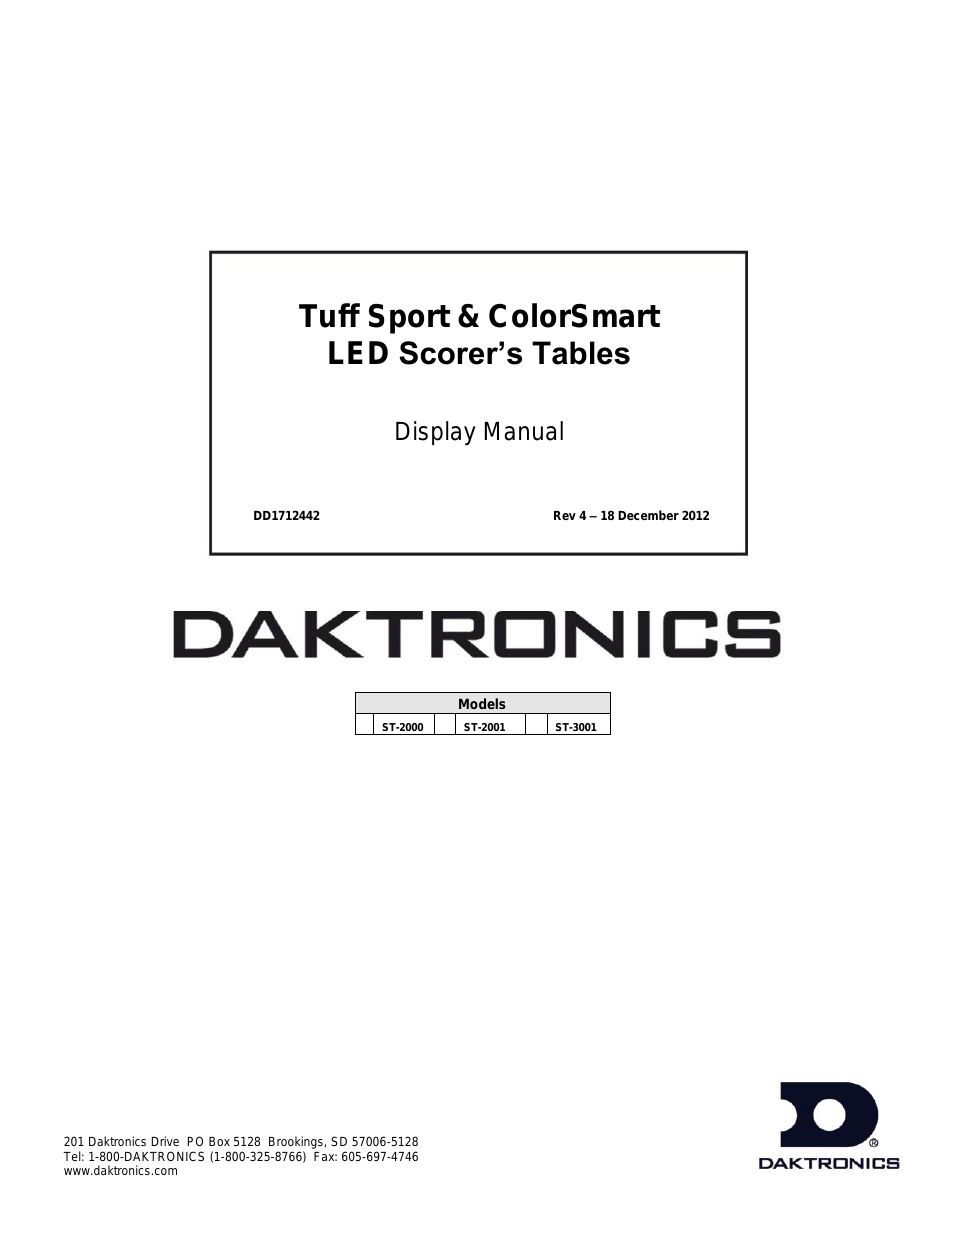 ST-2001 Tuff Sport & ColorSmart LED Scorer’s Table